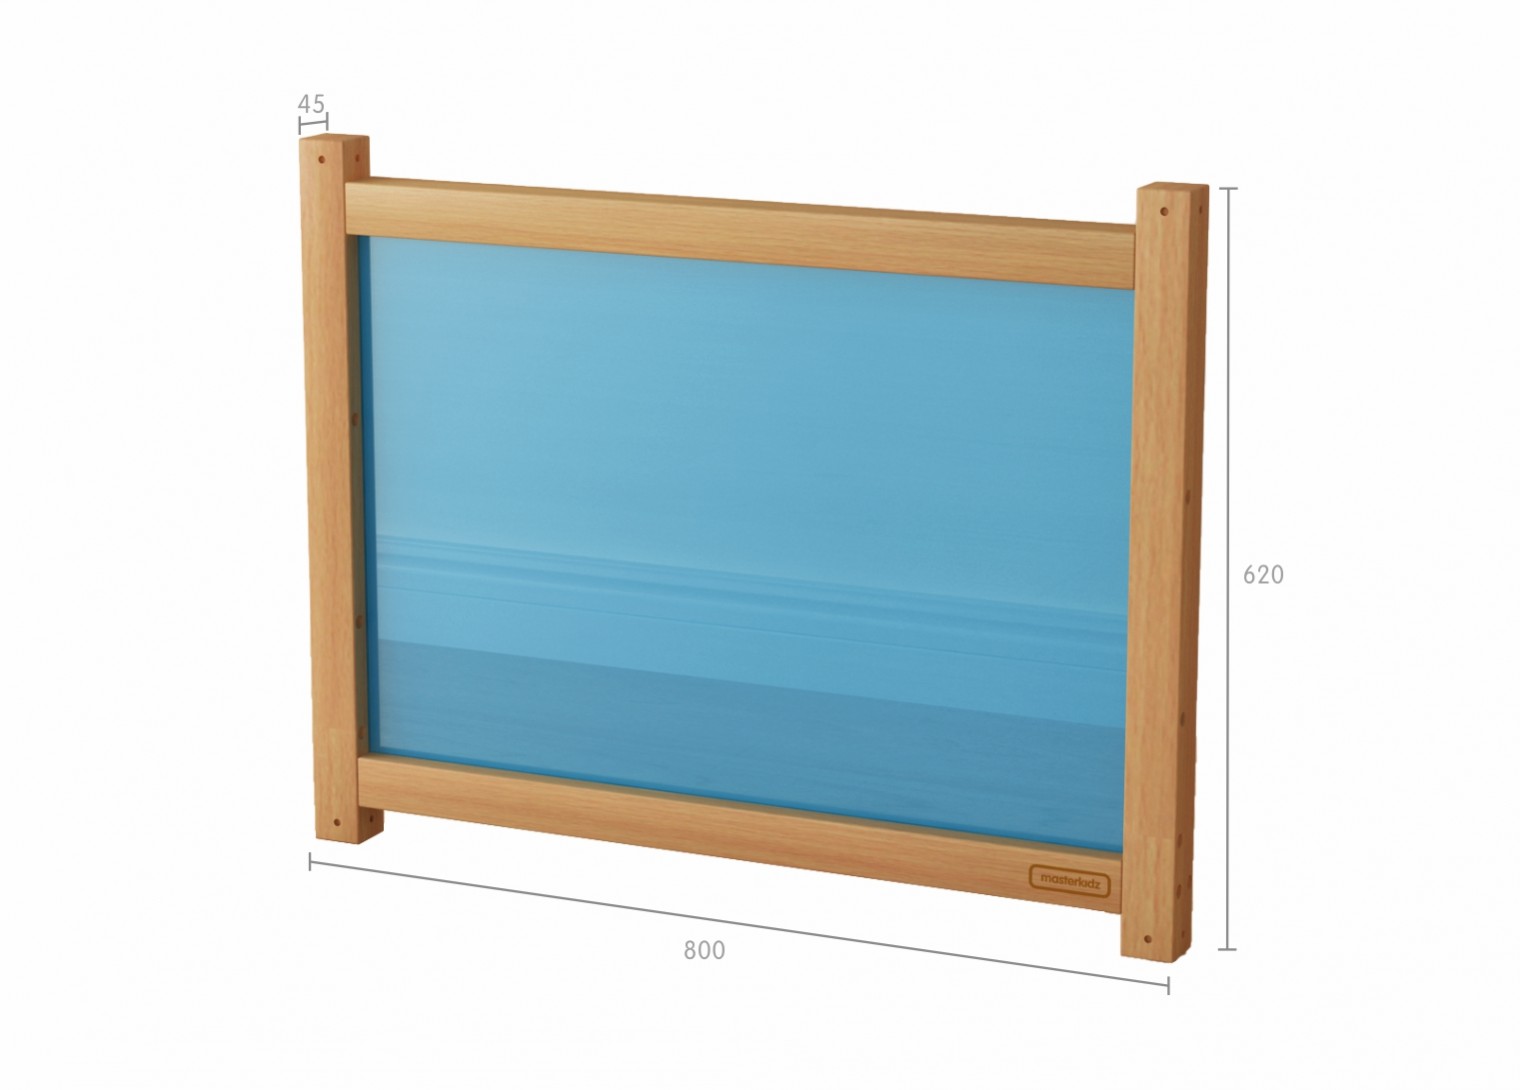 620H x 800L Divider Panel - Translucent Blue